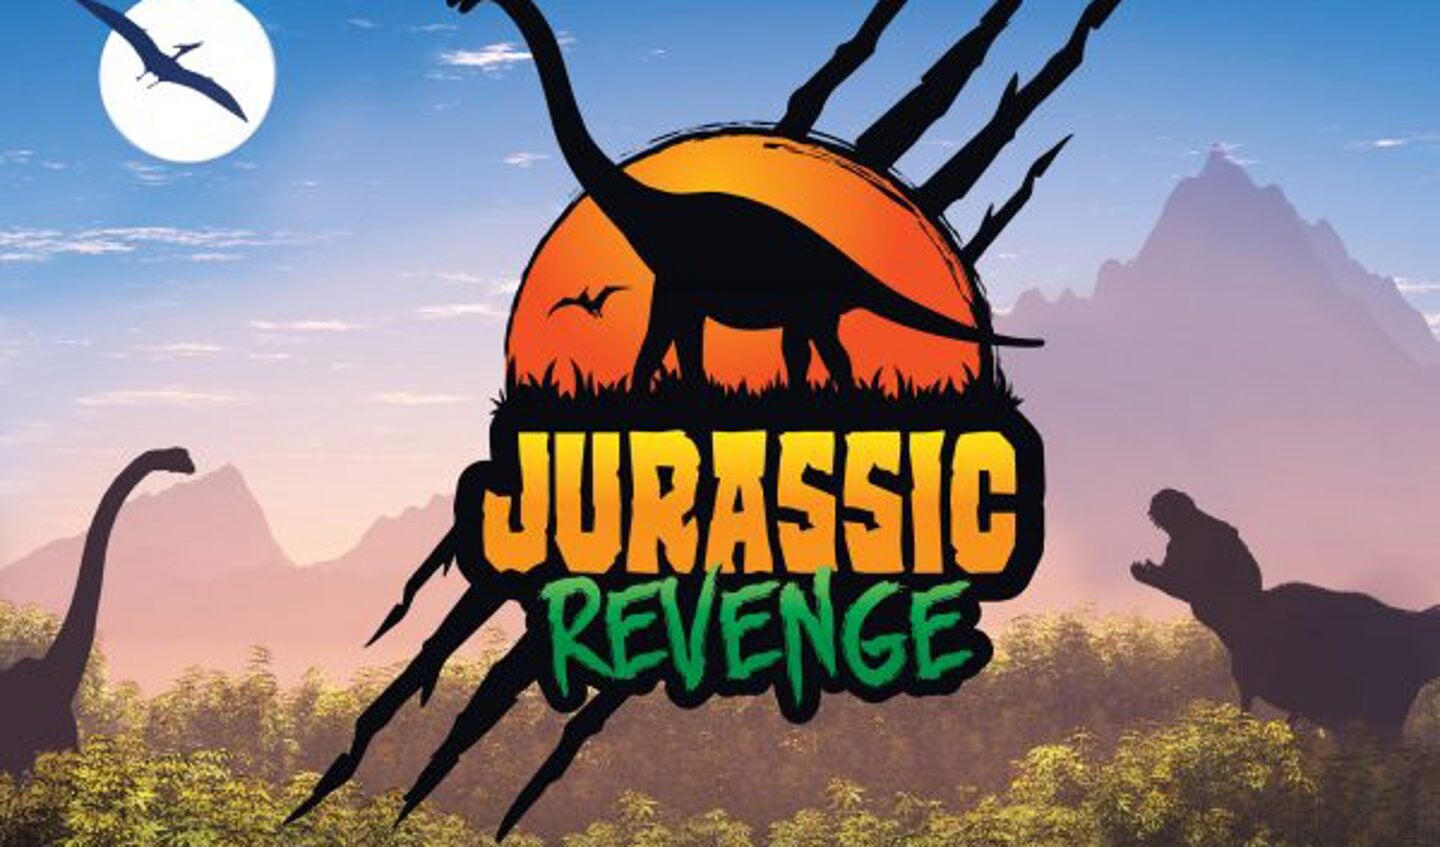 De familievoorstelling Jurassic Revenge is leuk voor jong en oud.